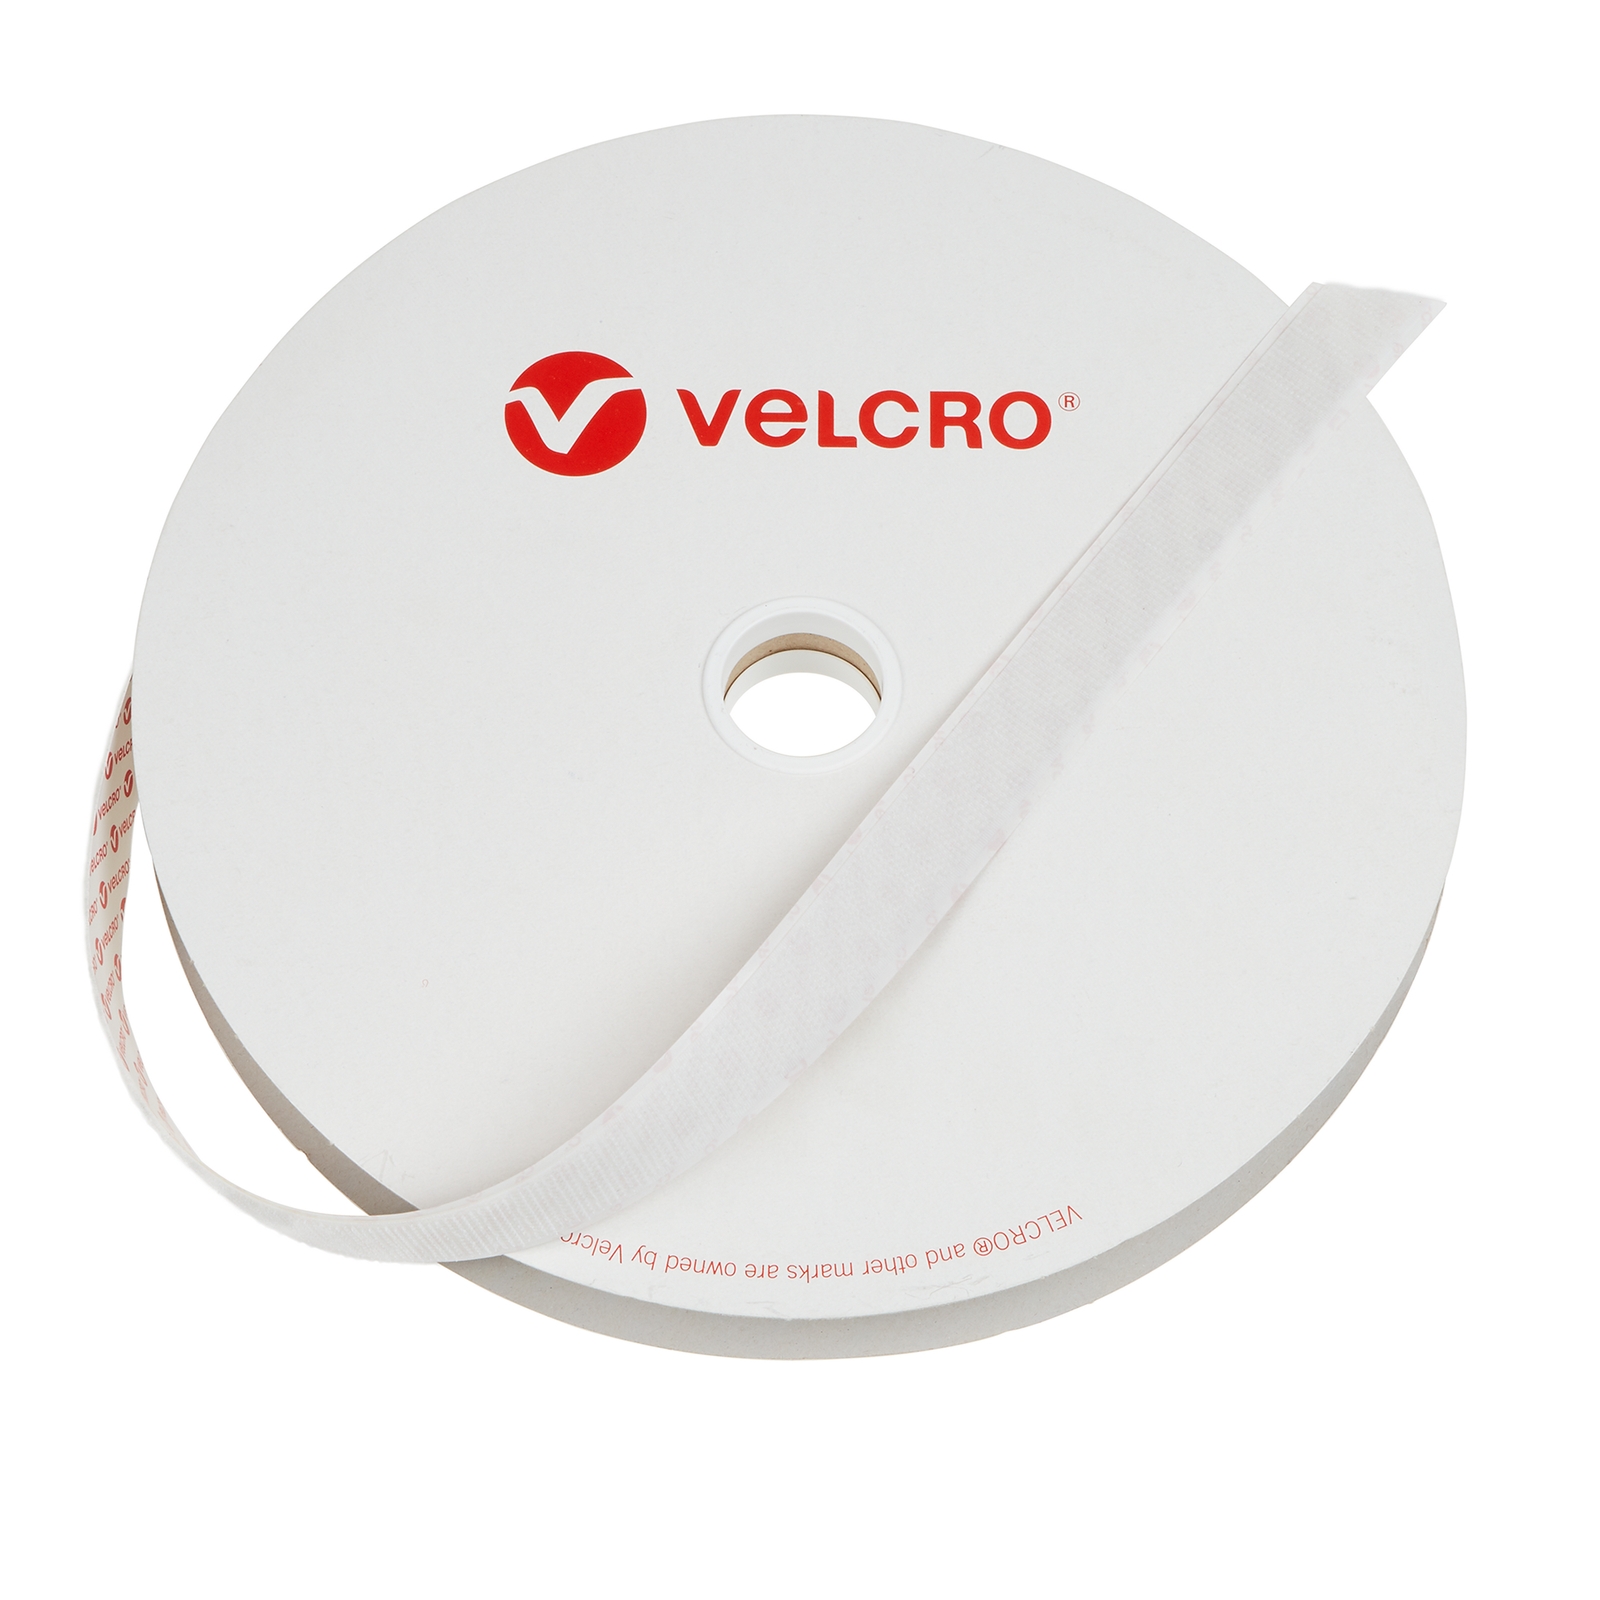 Velcro® Brand Adhesive Hook Tape